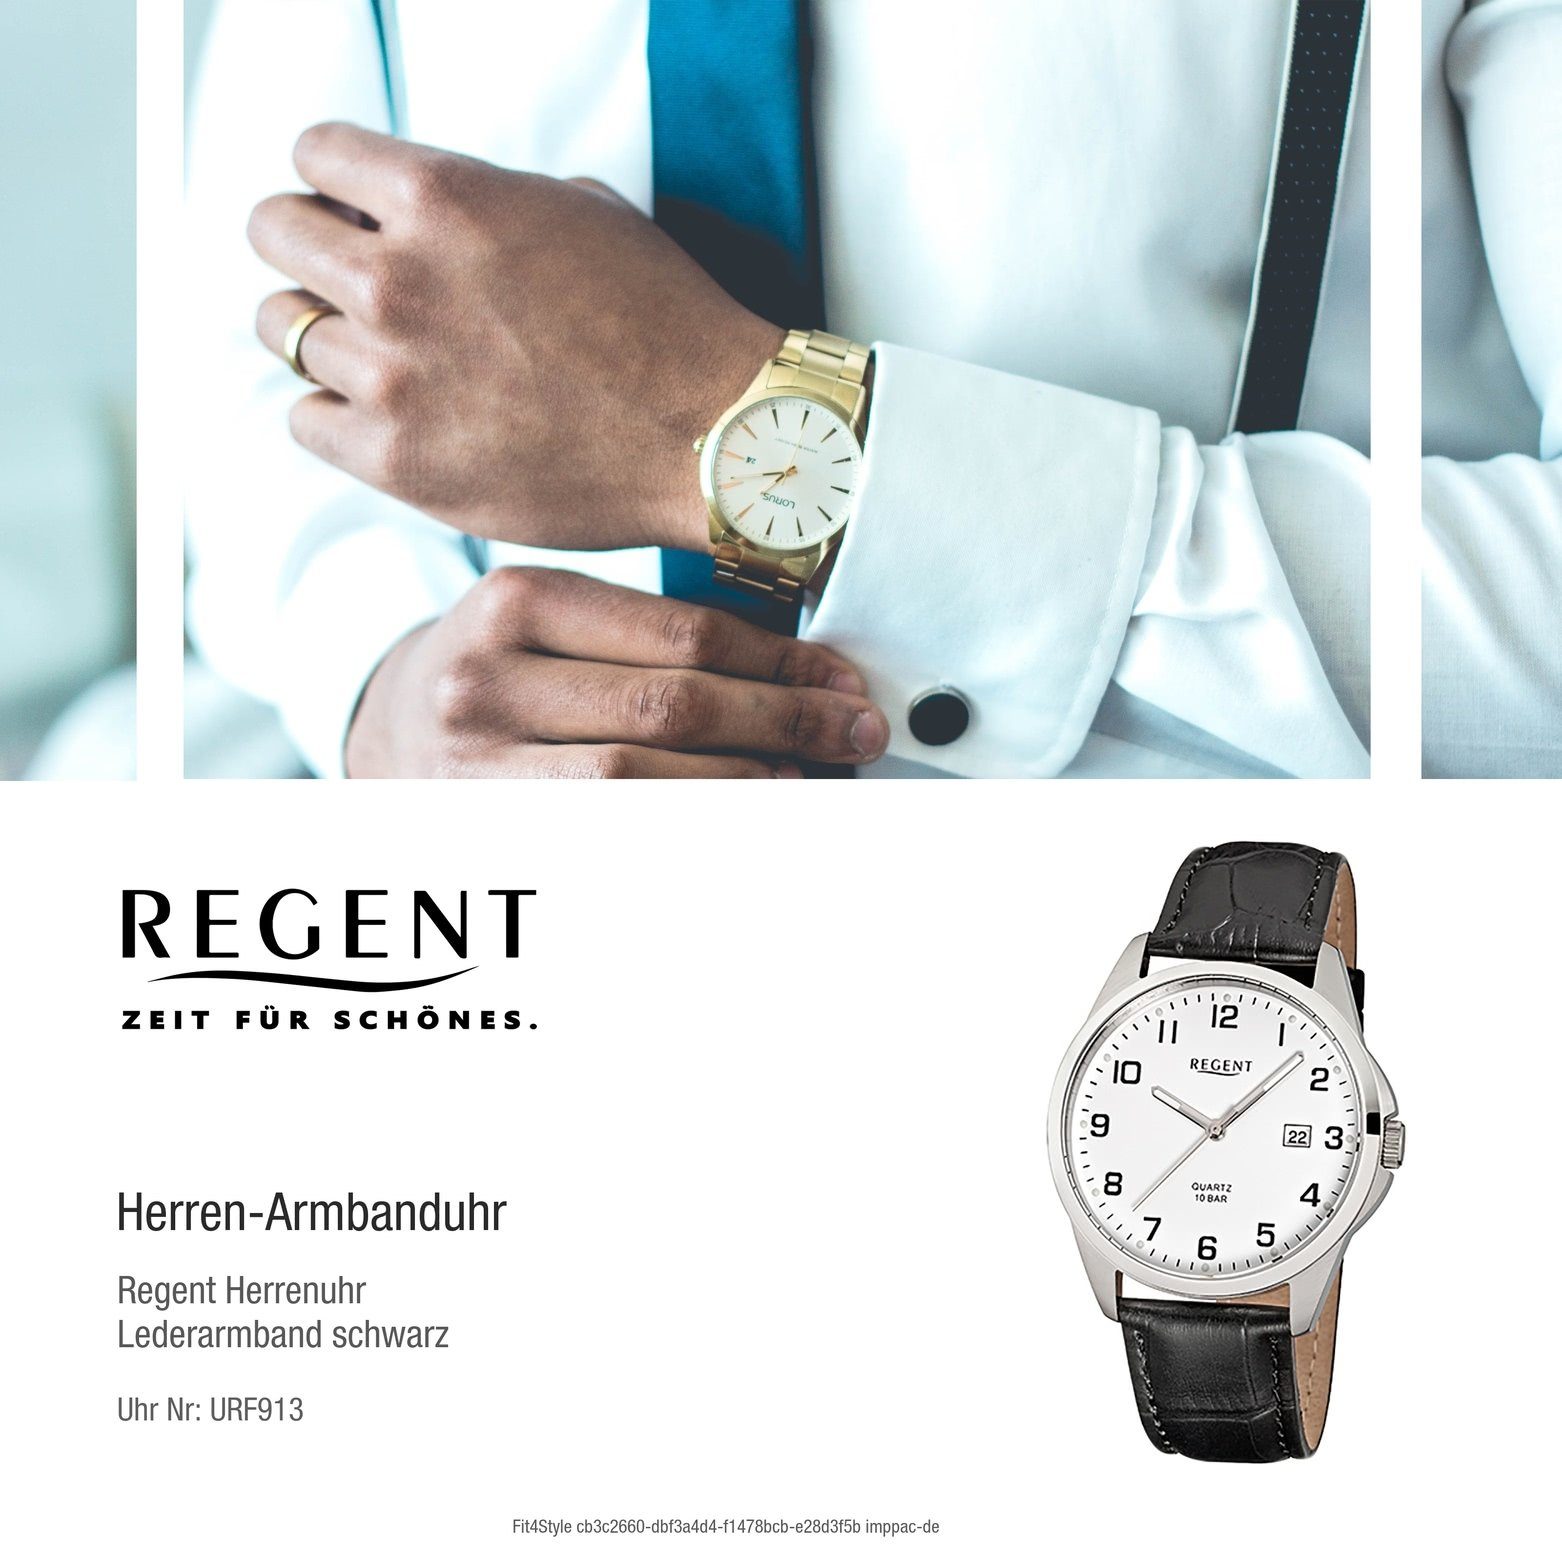 Regent Quarzuhr Herren Armbanduhr mittel Lederarmband rund, schwarz 39mm), Analog, Regent (ca. Herren-Armbanduhr